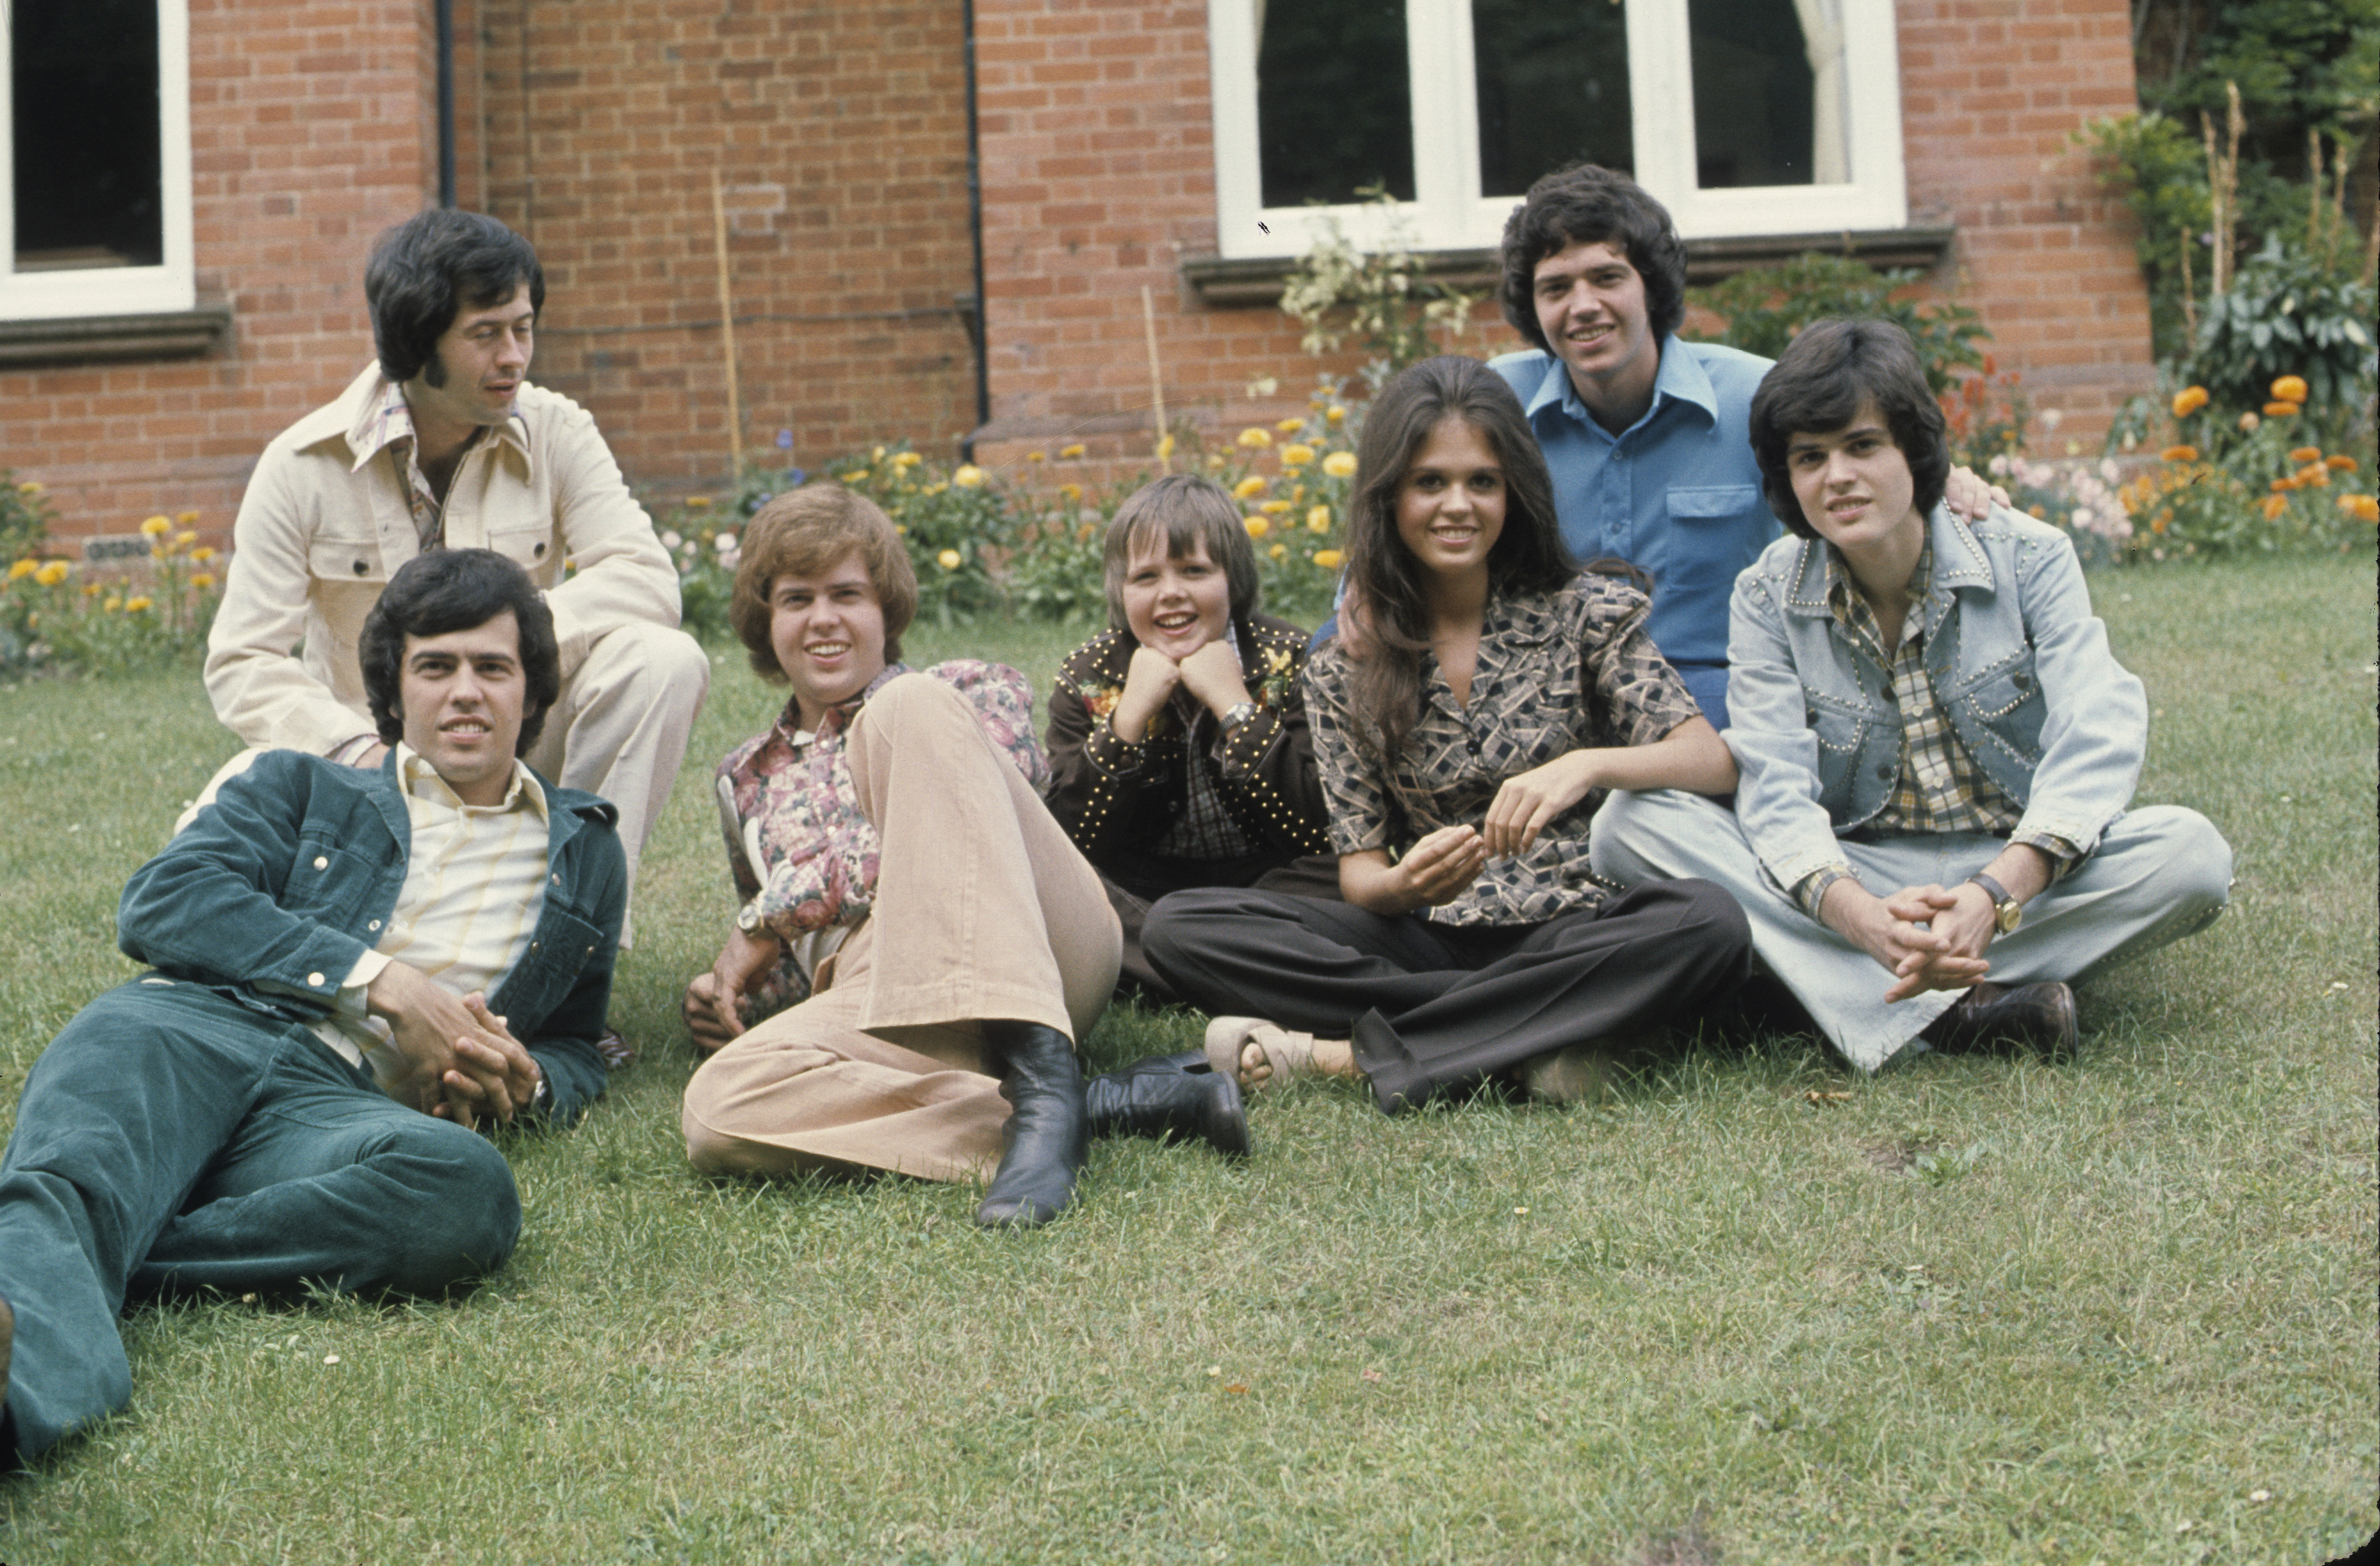 Wayne Osmond, Jay Osmond, Merrill Osmond, Jimmy Osmond, Marie Osmond, Alan Osmond, and Donny Osmond in England in 1974 | Source: Getty Images